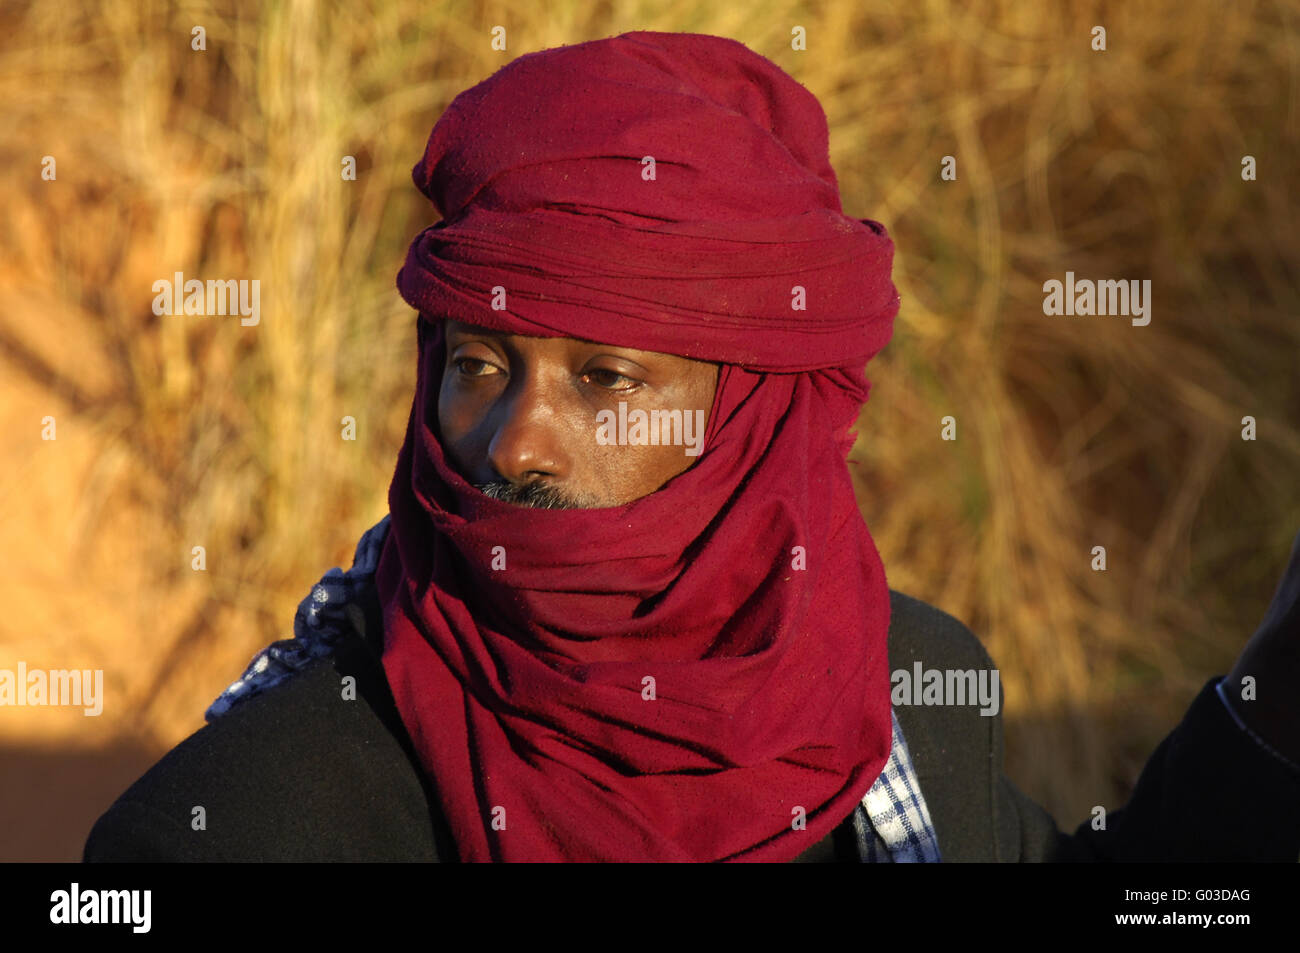 Tuareg man with a red chech, Sahara desert, Libya Stock Photo